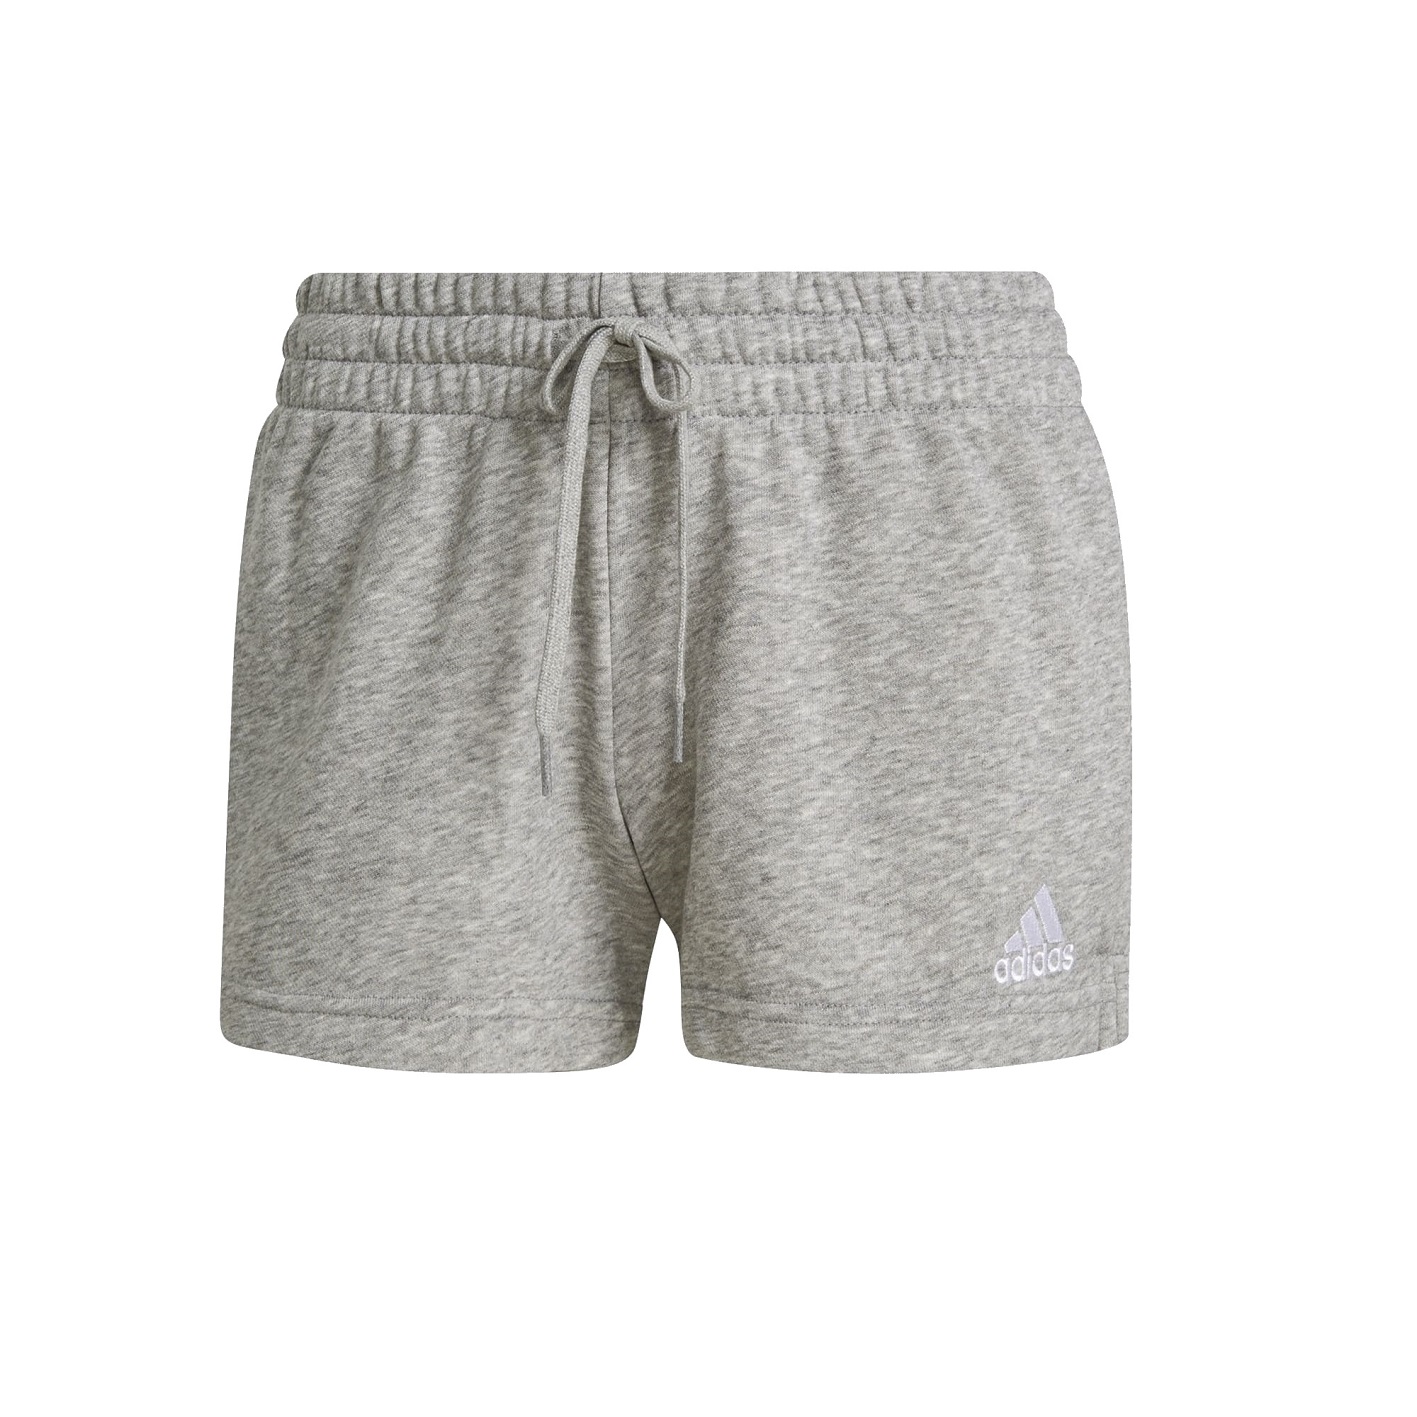 ☆ Adidas Essential Regular Damen Shorts grau - hier bestellen!